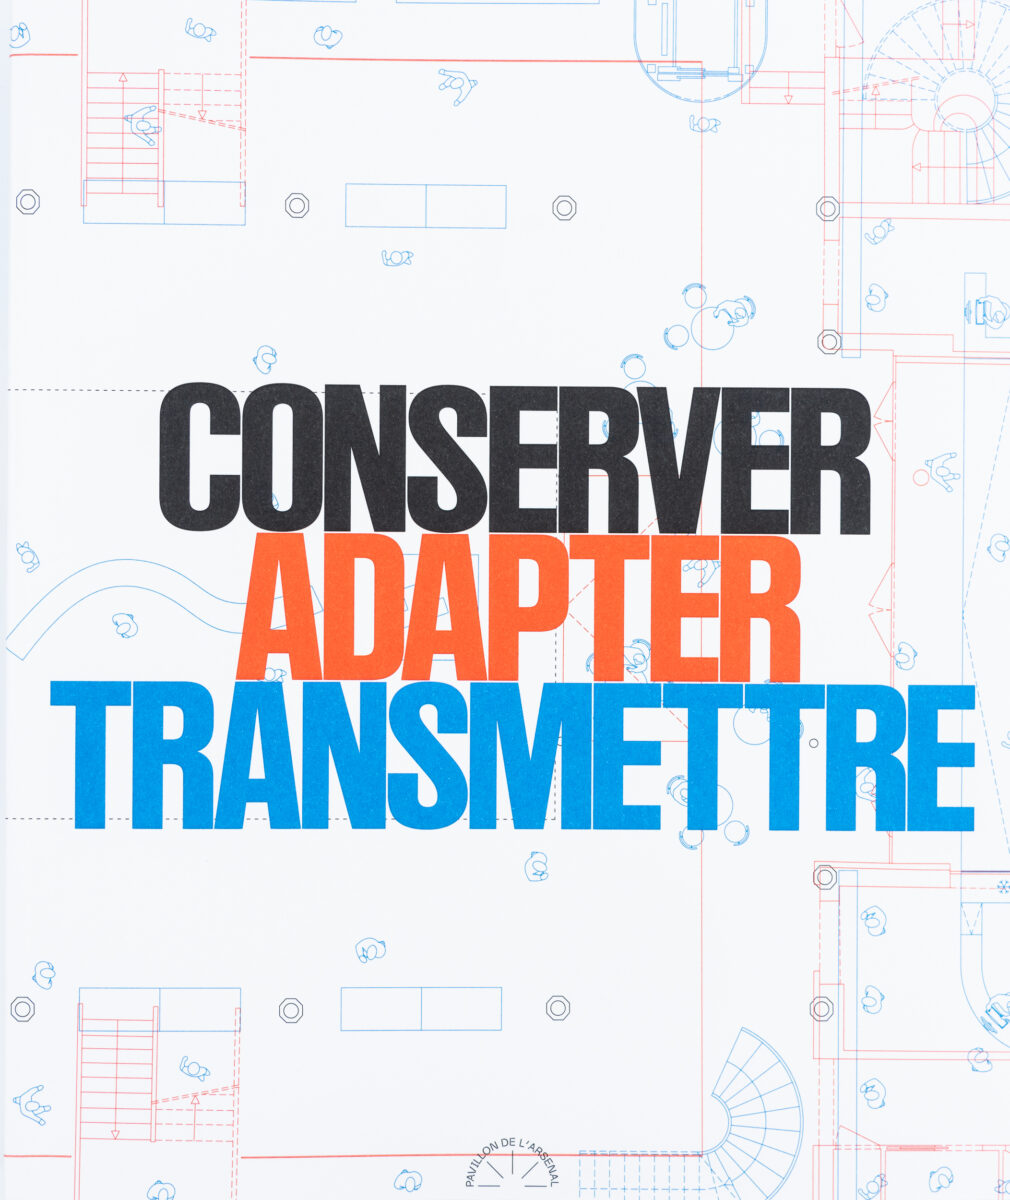 , Conserver, Adapter, Transmettre